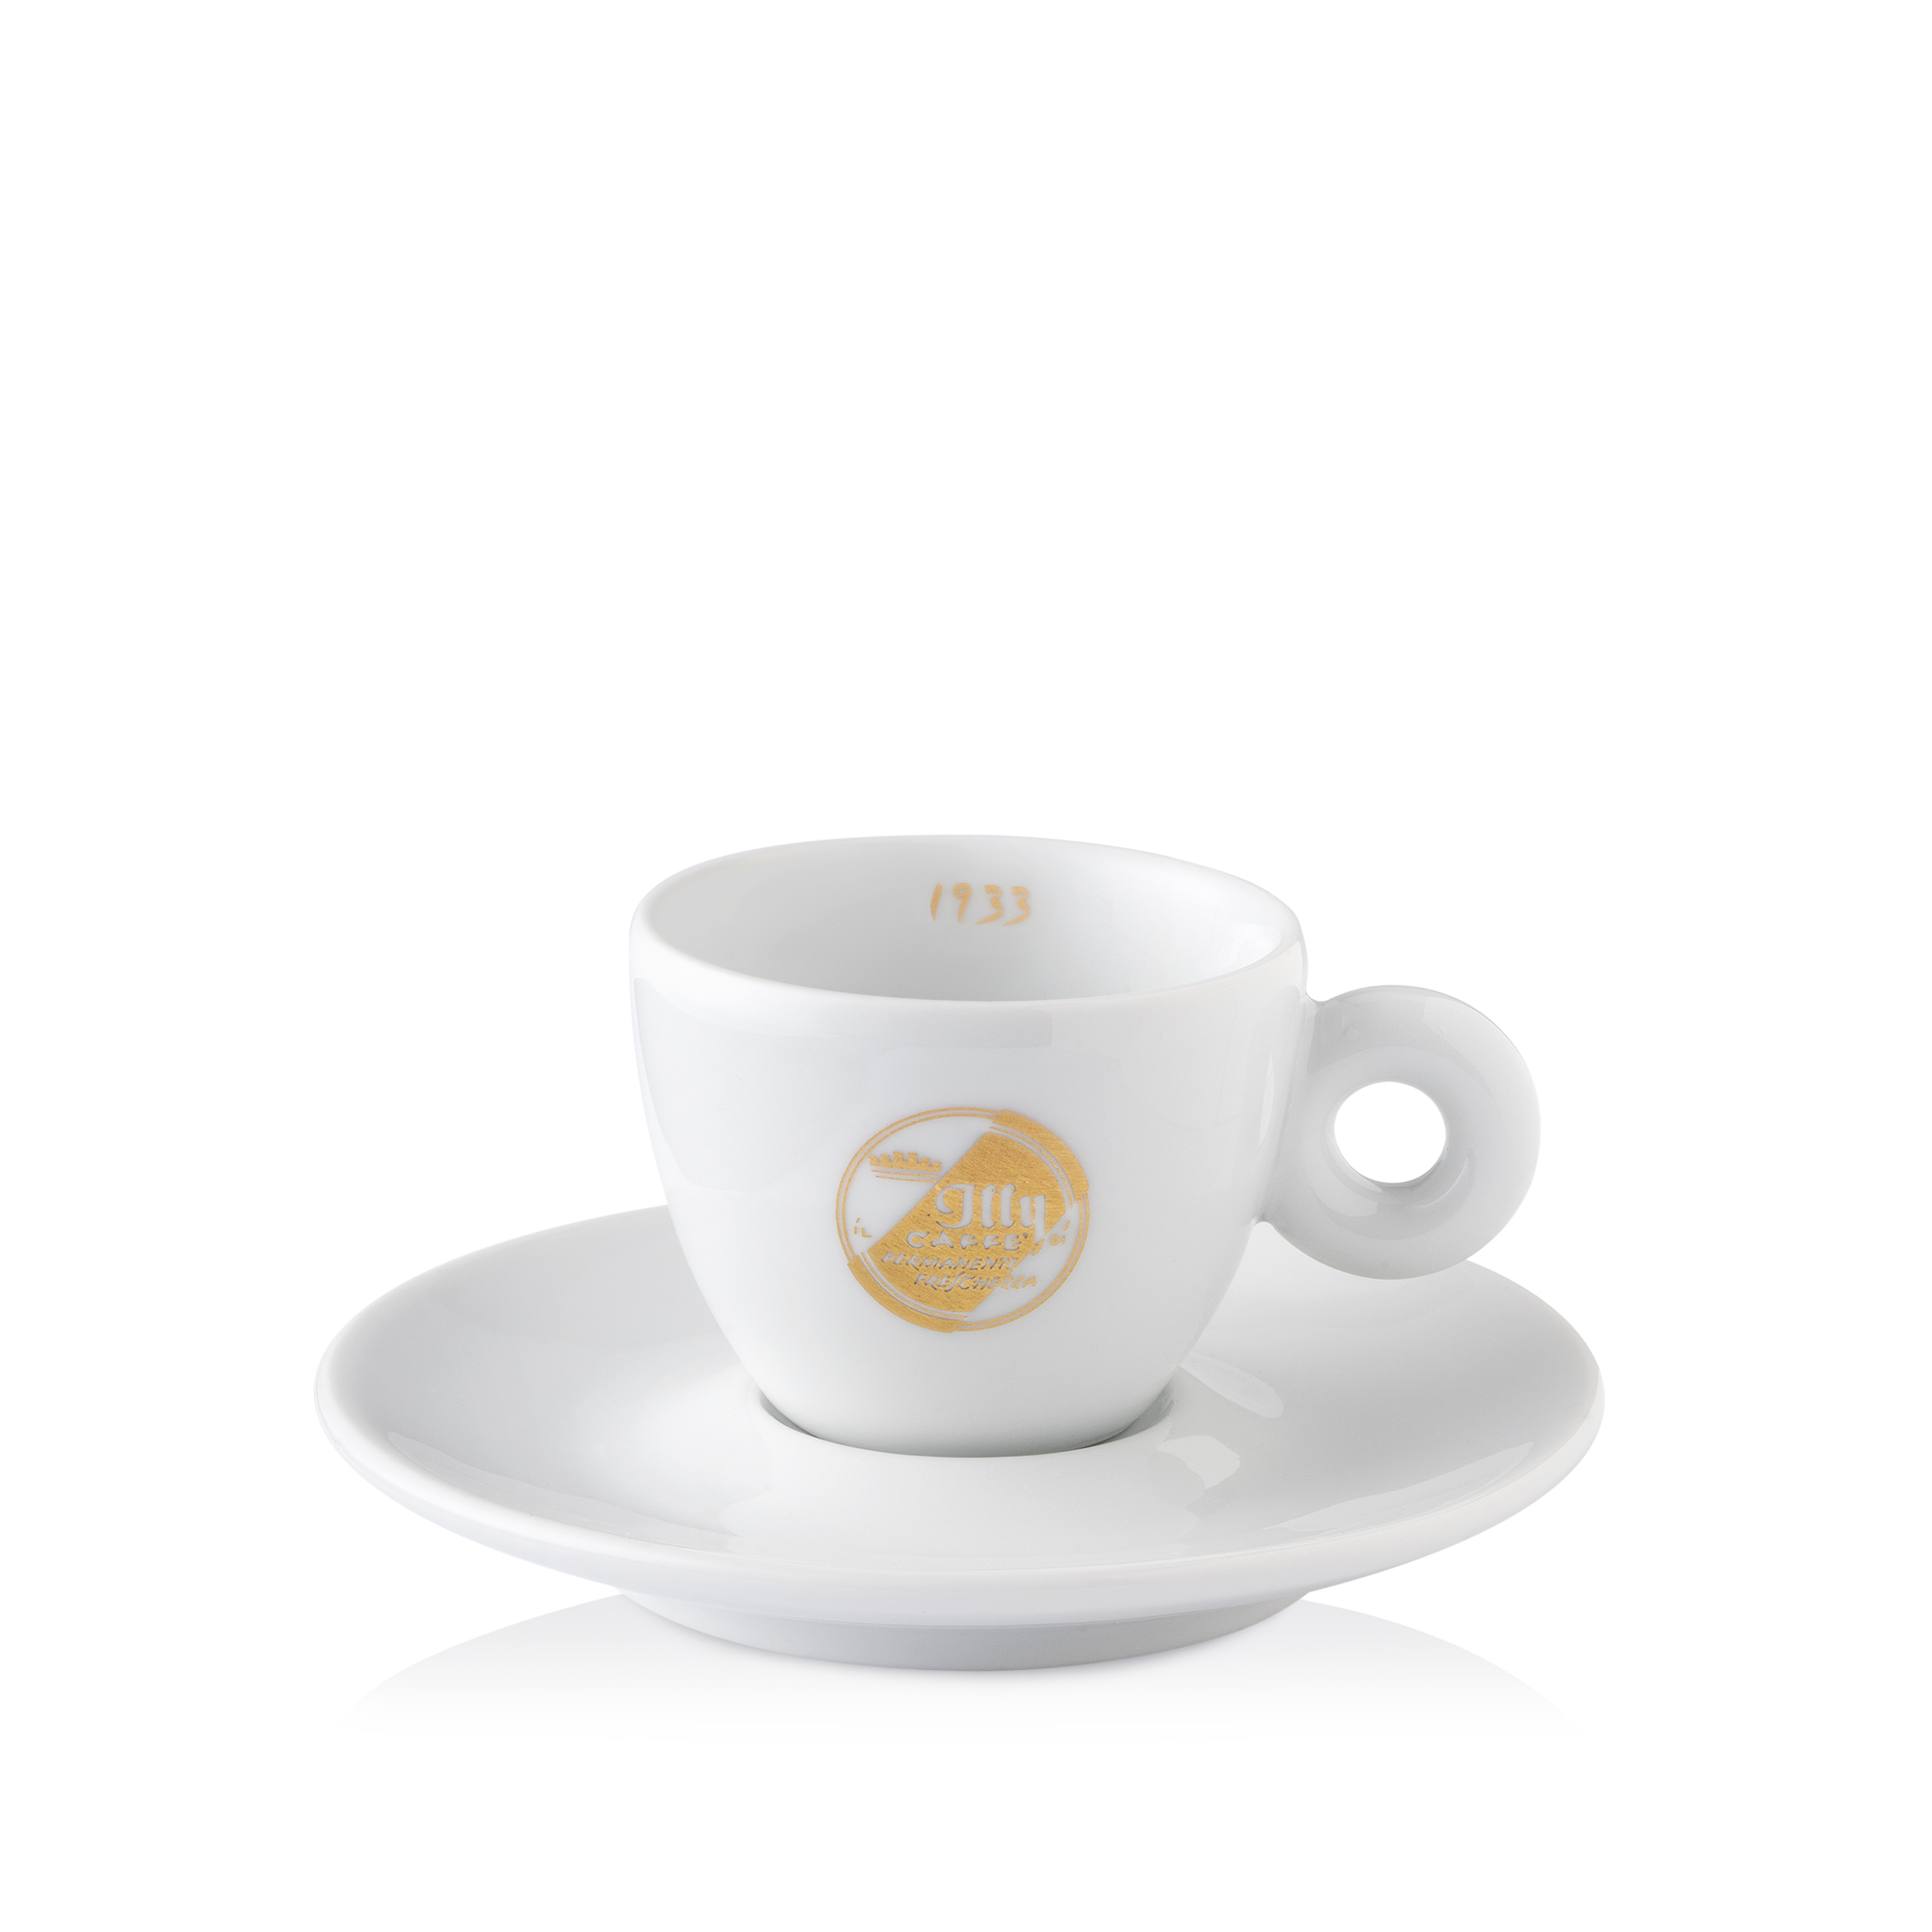 Collection illy Heritage - 6 tasses à café espresso